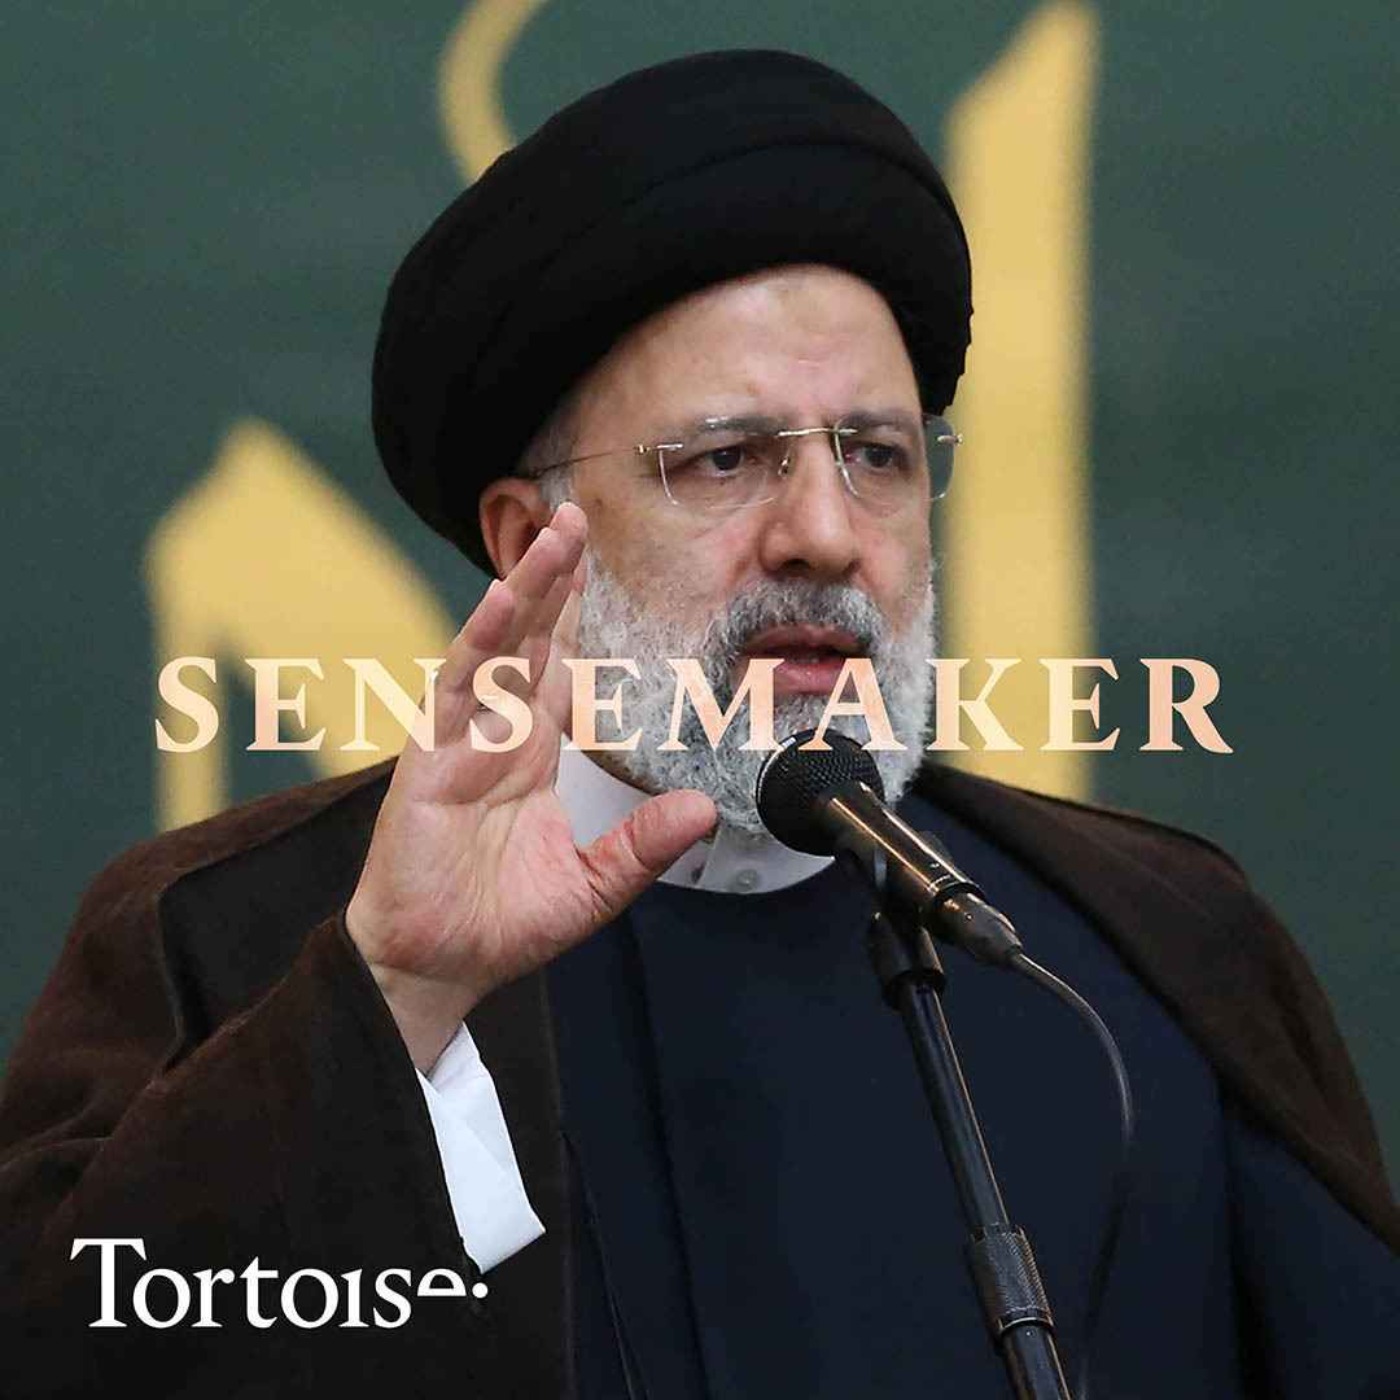 Sensemaker: The death of Iran’s president